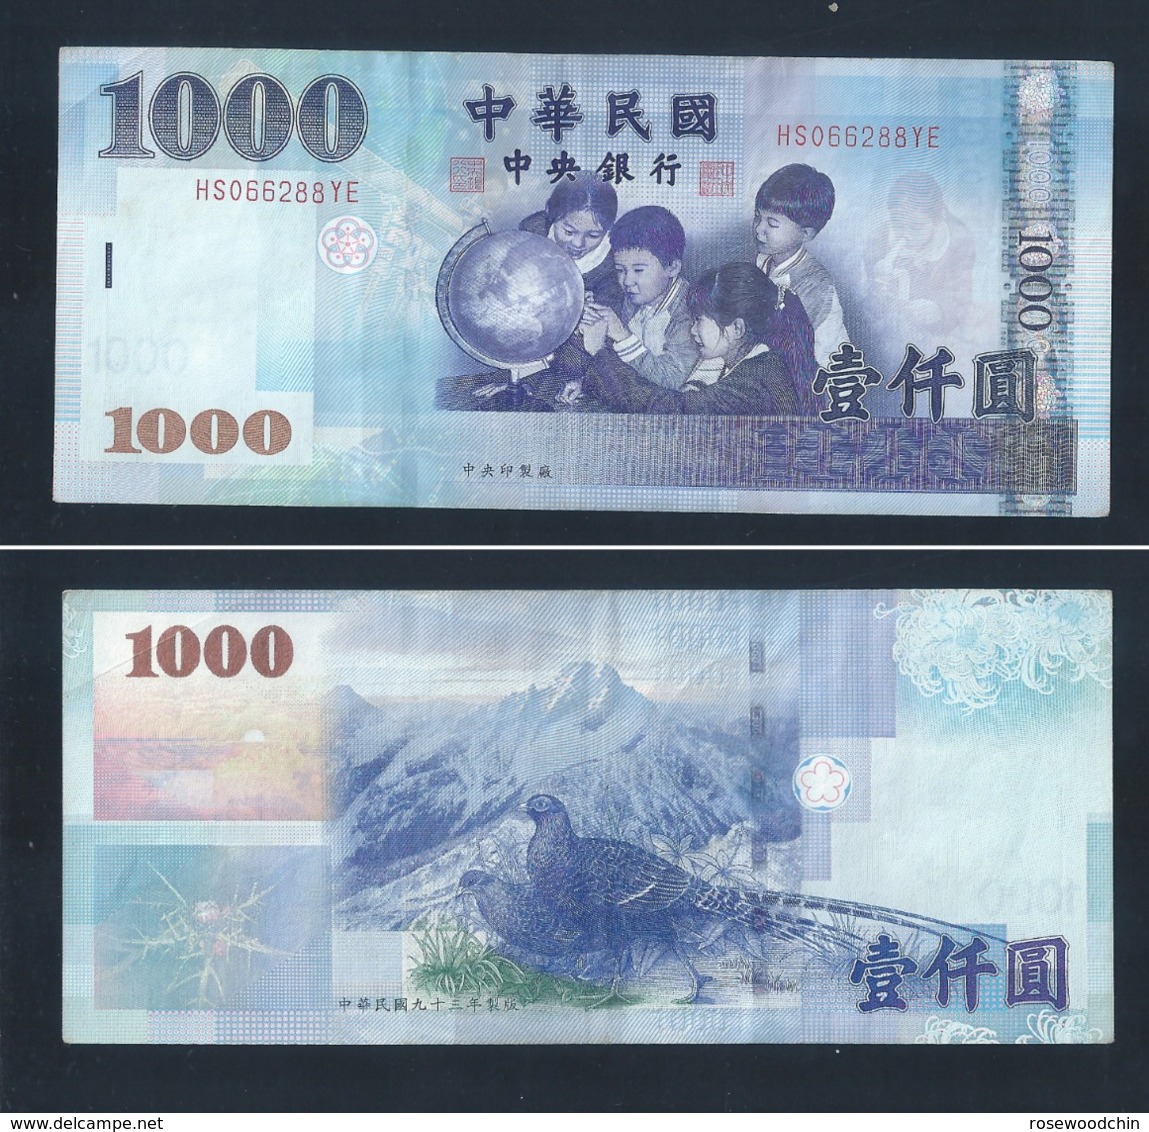 2004 Taiwan 1000 Yuan Banknote Paper Money Bill (中华民国九十三年) VF Cool No.HS066288YE (#152) - Taiwan